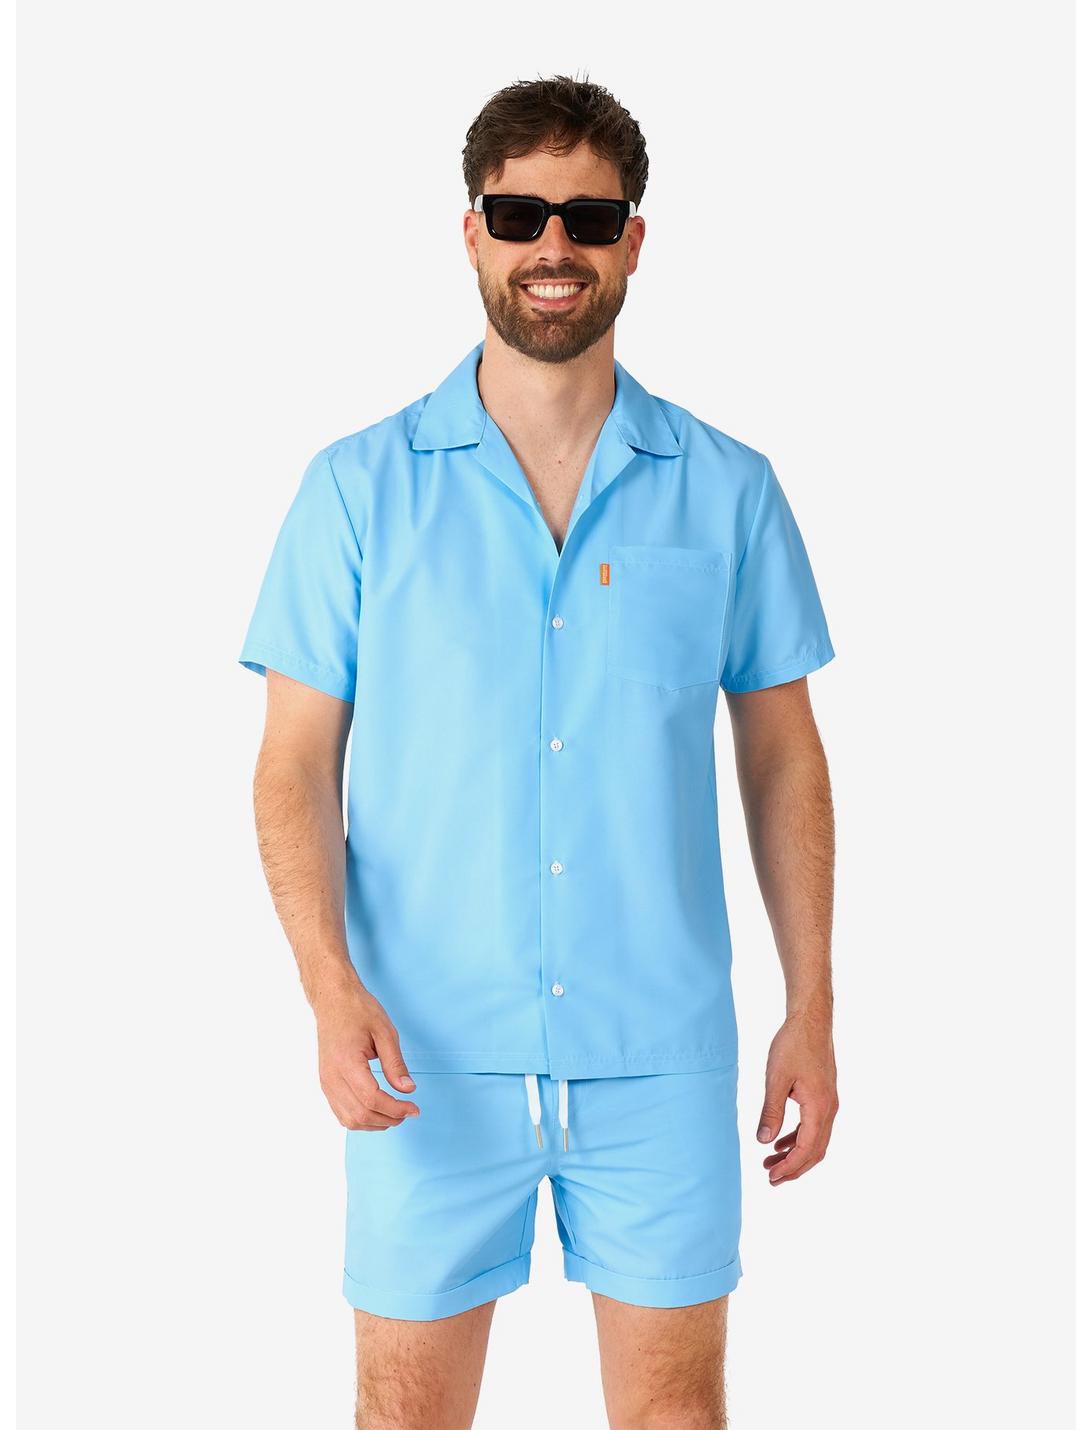 Cool Blue Summer Button-Up Shirt and Short, BLUE, hi-res